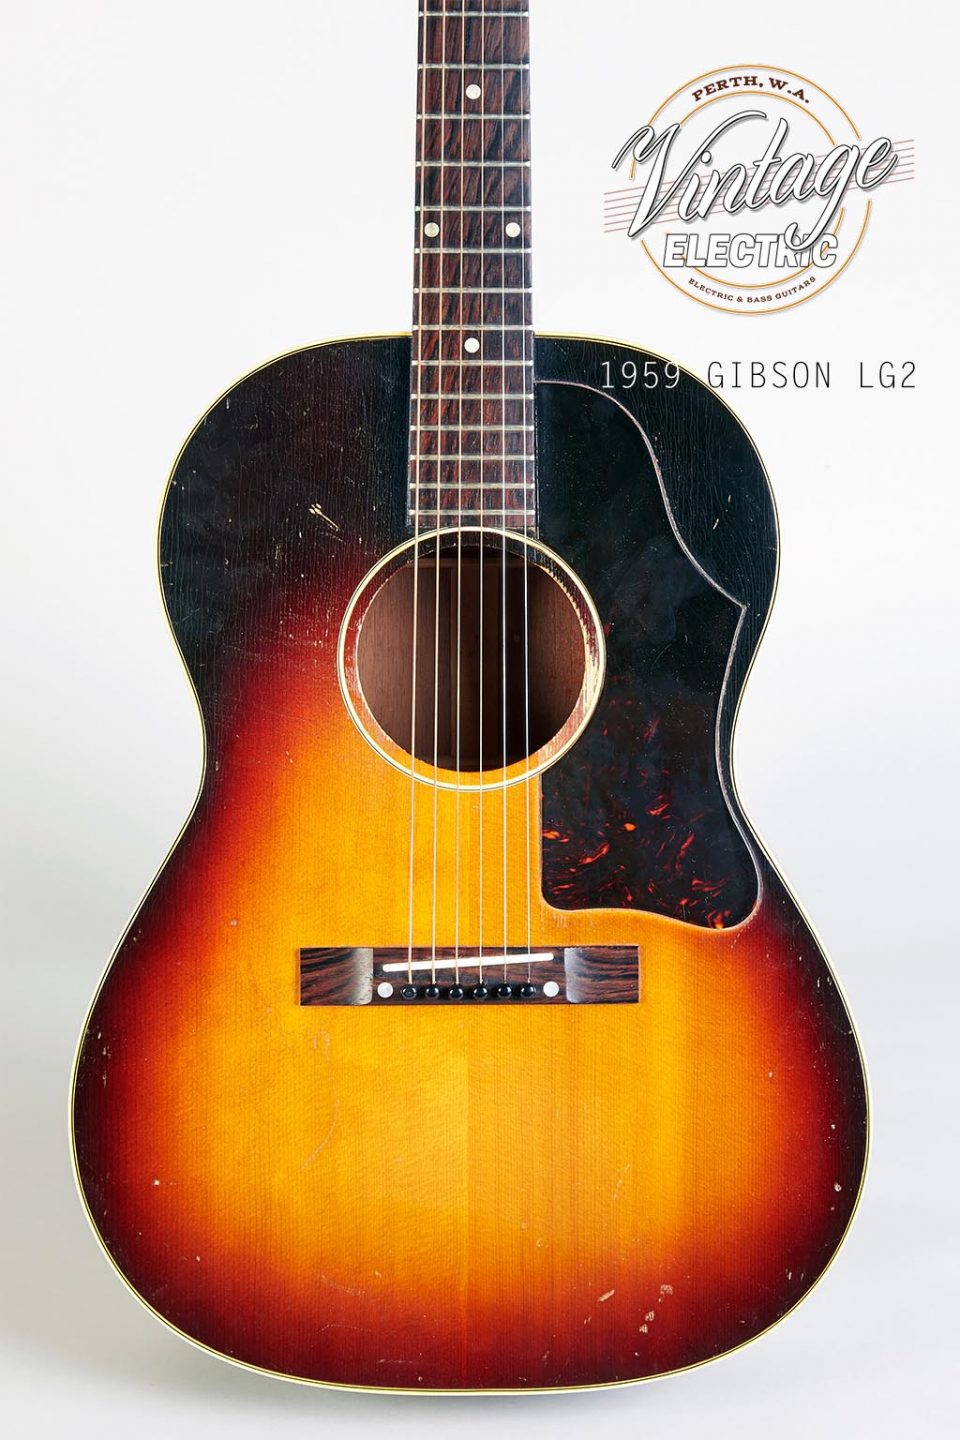 1959 USA Gibson LG2 Body